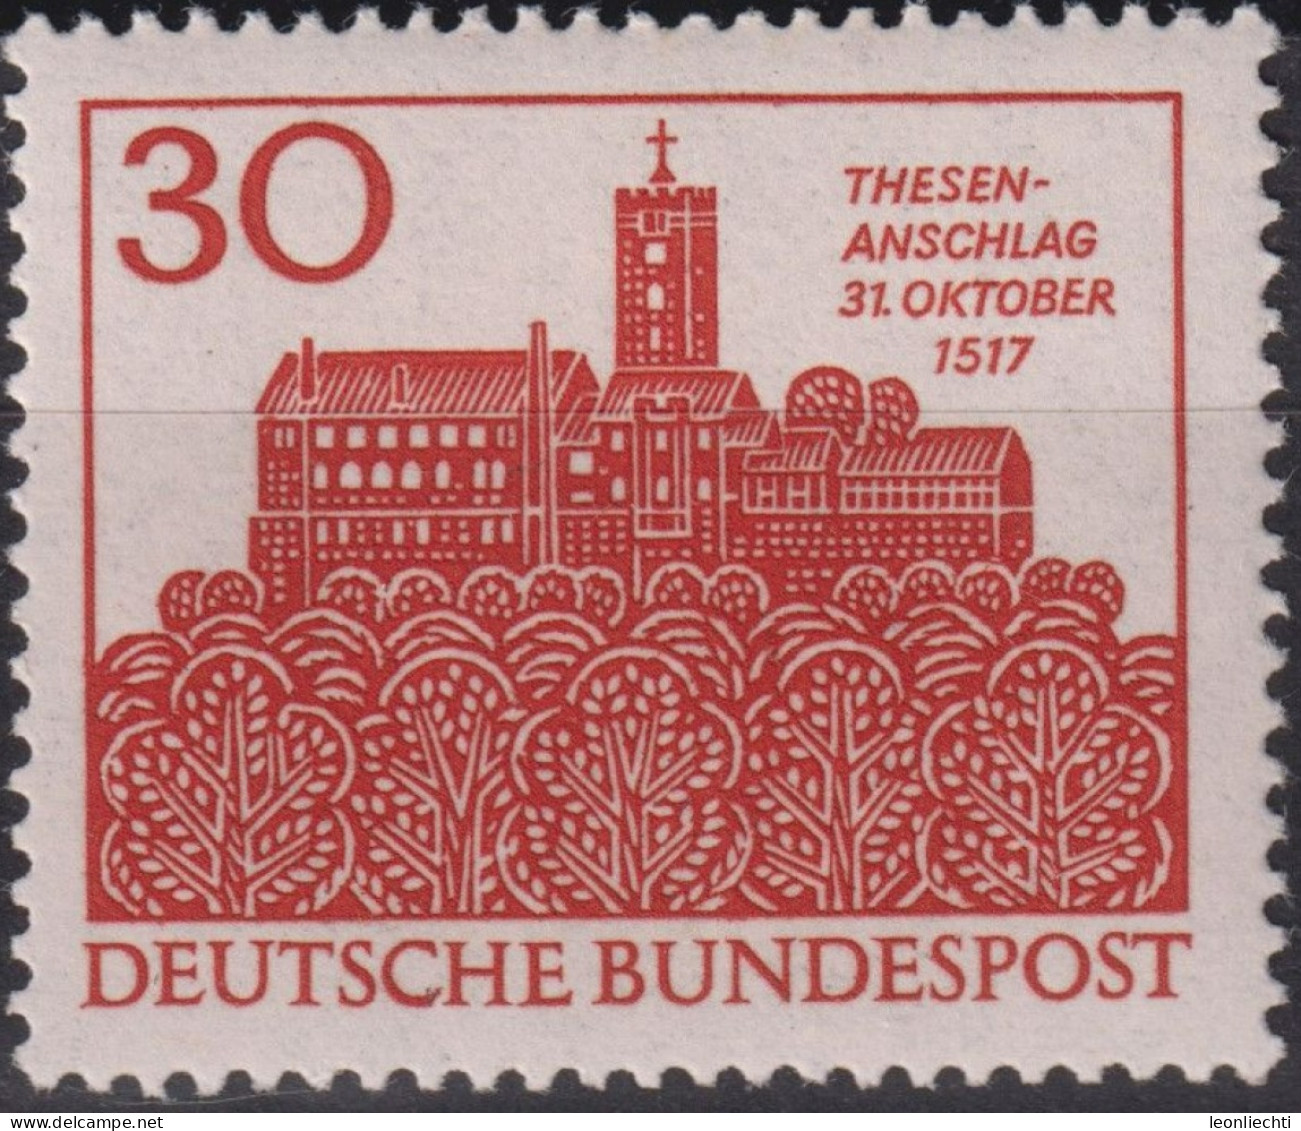 1967 Deutschland > BRD, ** Mi:DE 544, Sn:DE 976, Yt:DE 409, Wartburg Bei Eisenbach - Schlösser U. Burgen